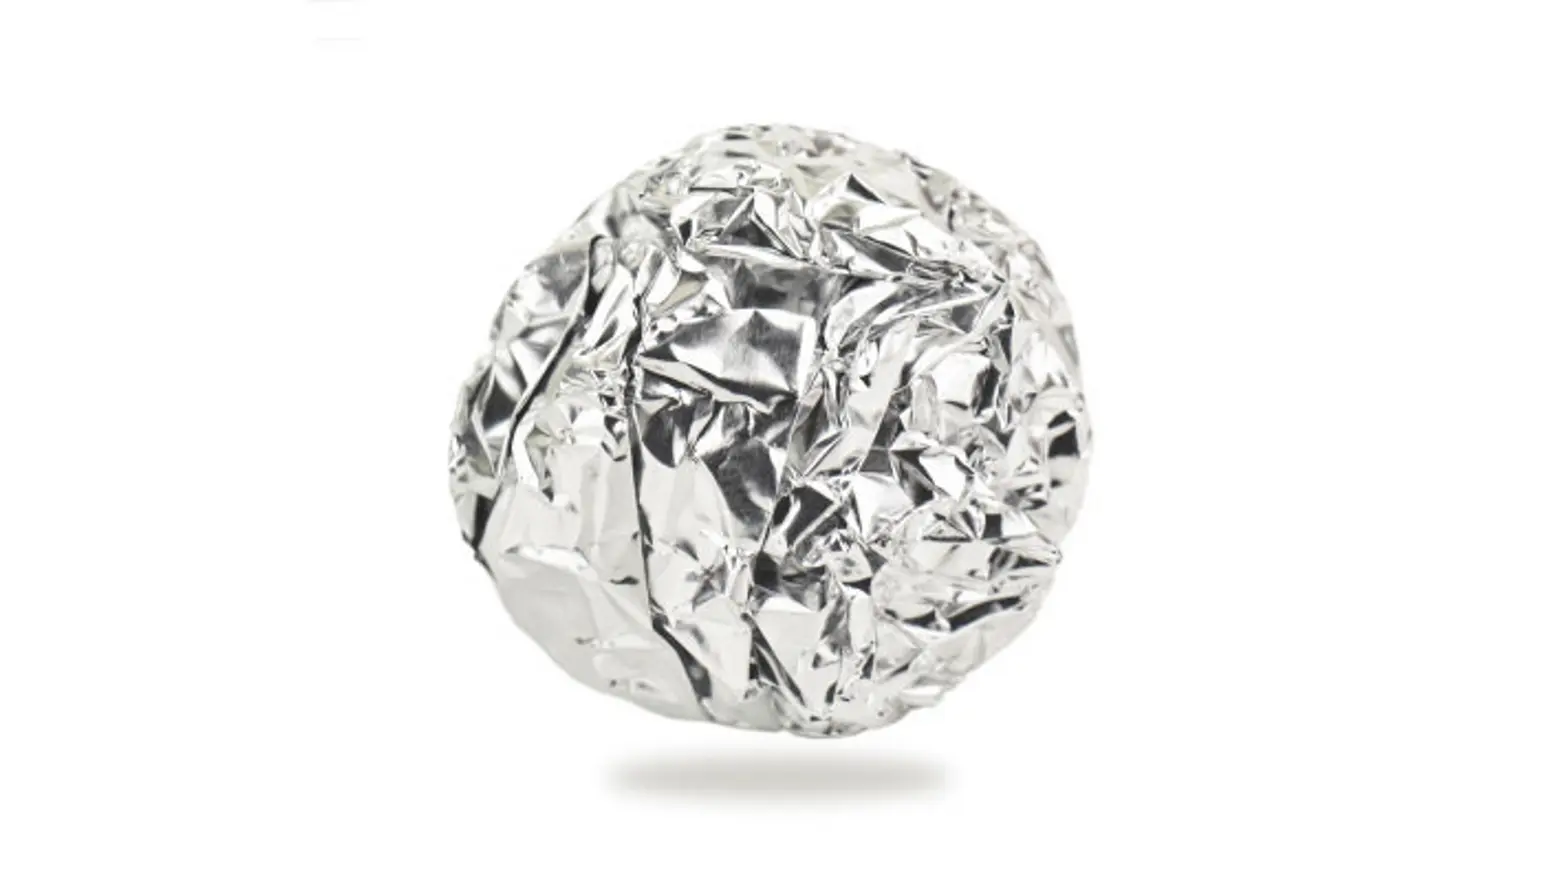 aluminum foil ball